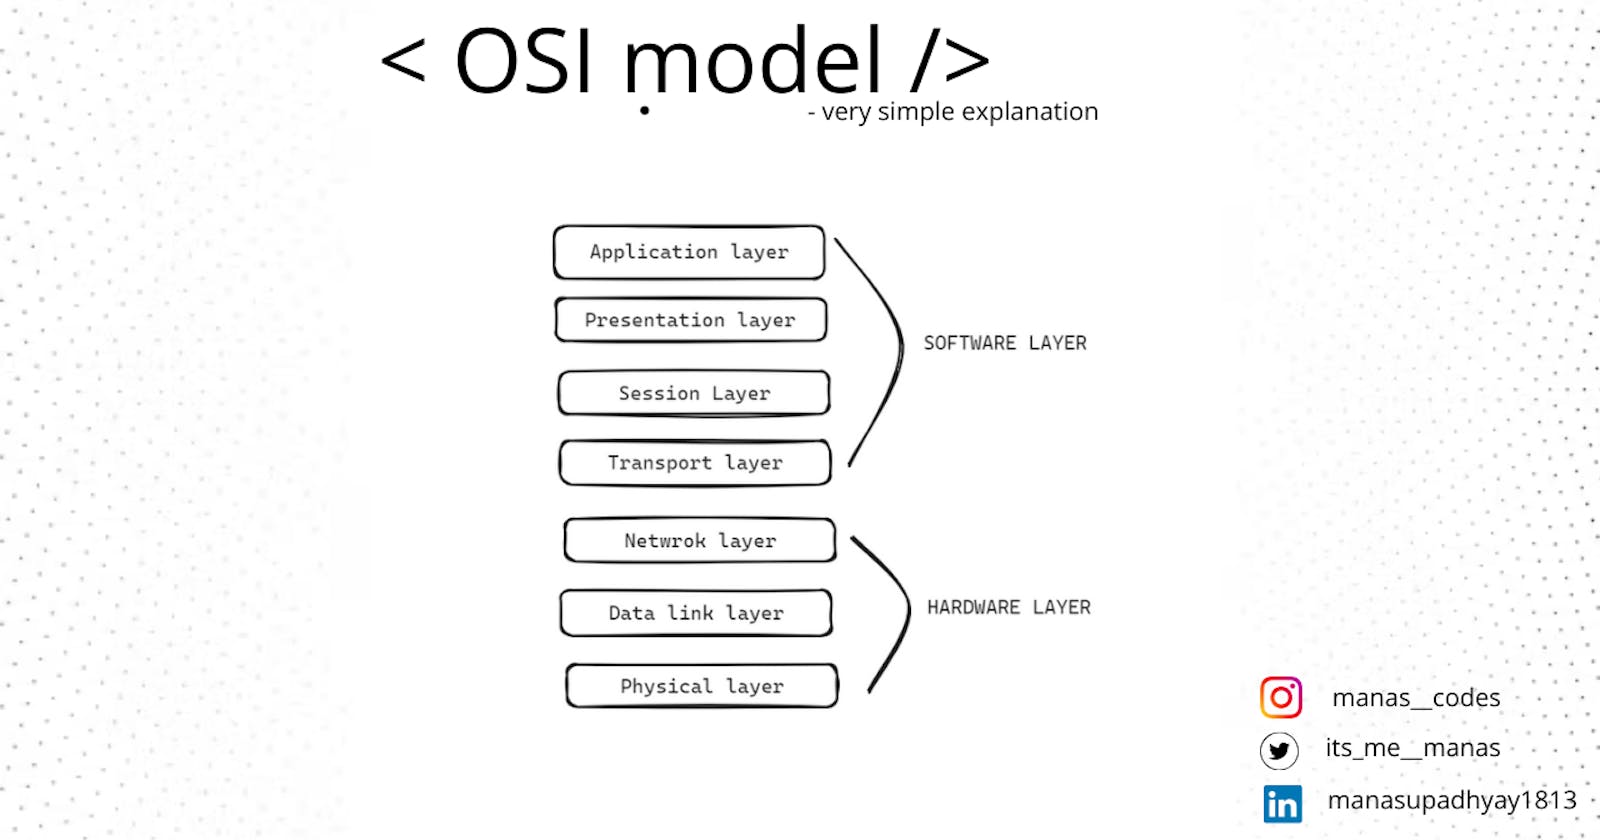 OSI model simple explanation.